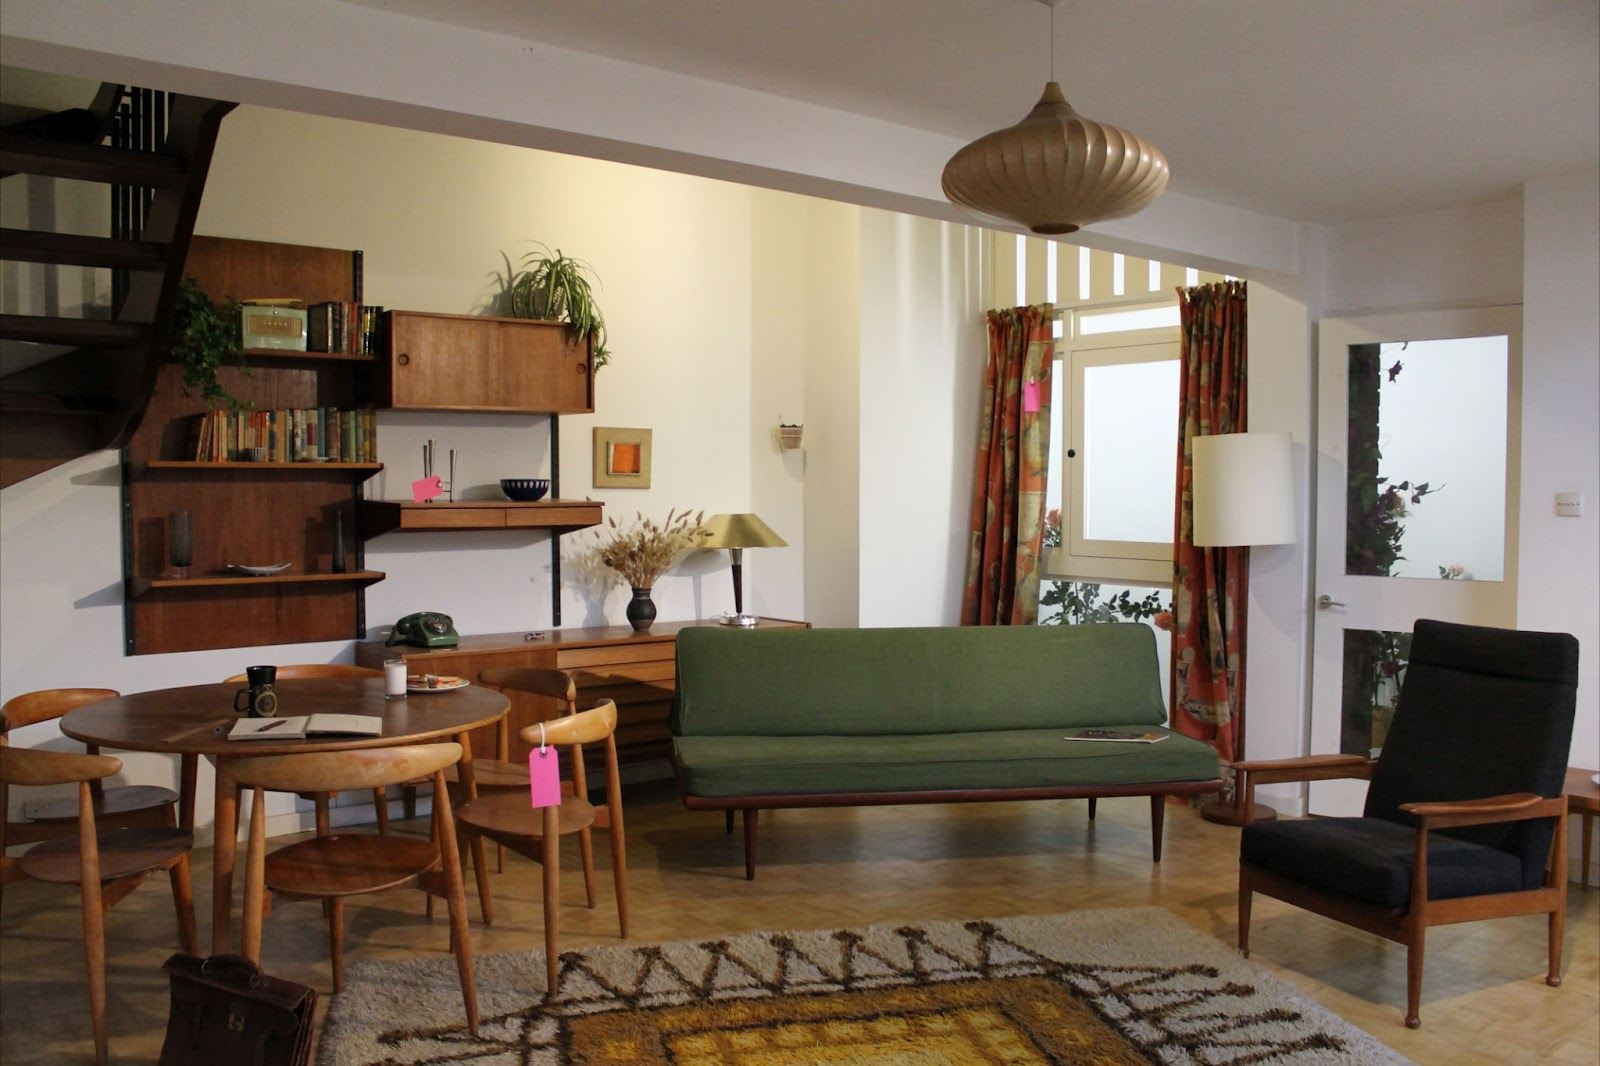 Top mid-century living room ideas